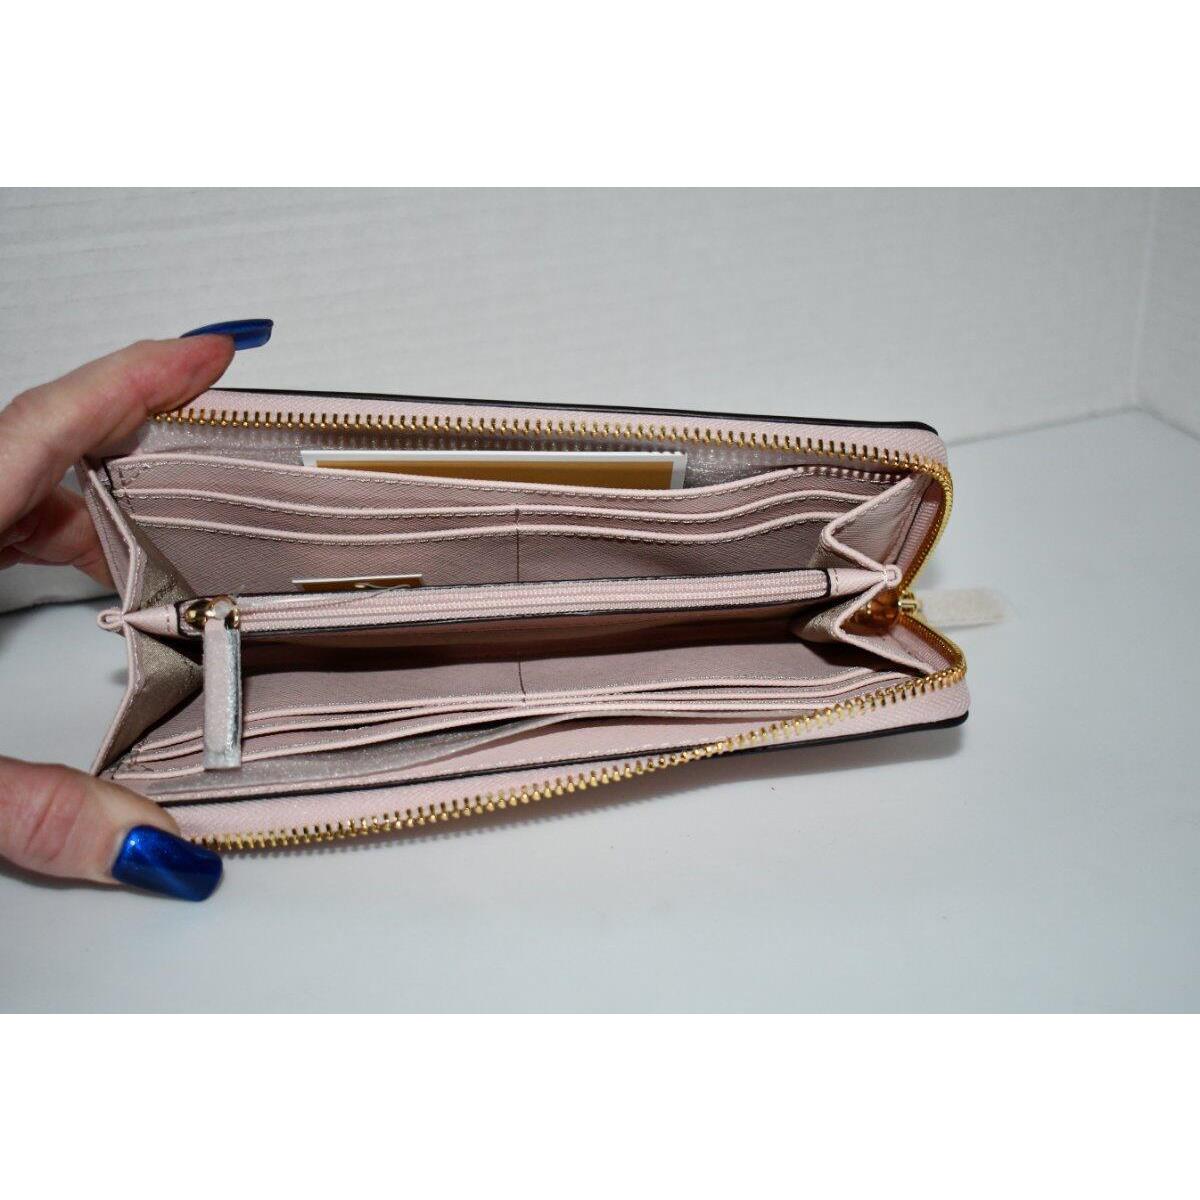 Michael Kors LG Saffiano Leather Quarter-zip Wallet in Powder Blush 35T6GTVE3L